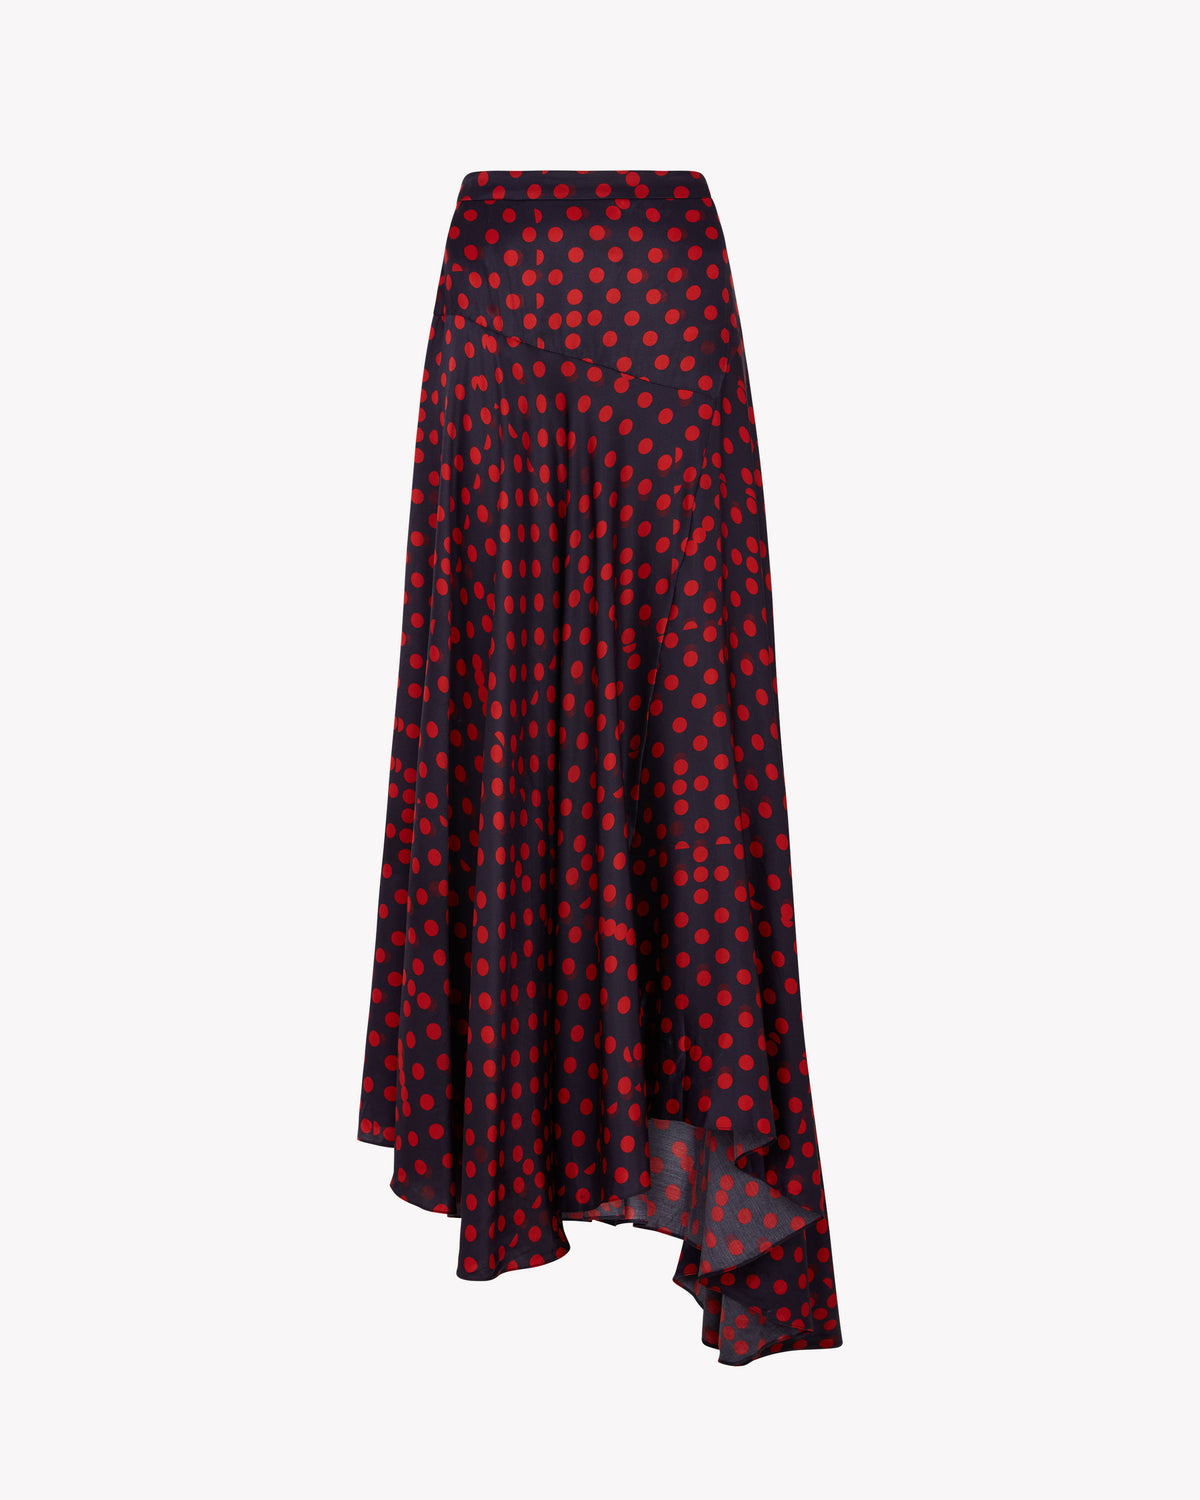 Graphic Polka Dot Asymmetric Maxi Skirt - Navy/Red SERENA BUTE